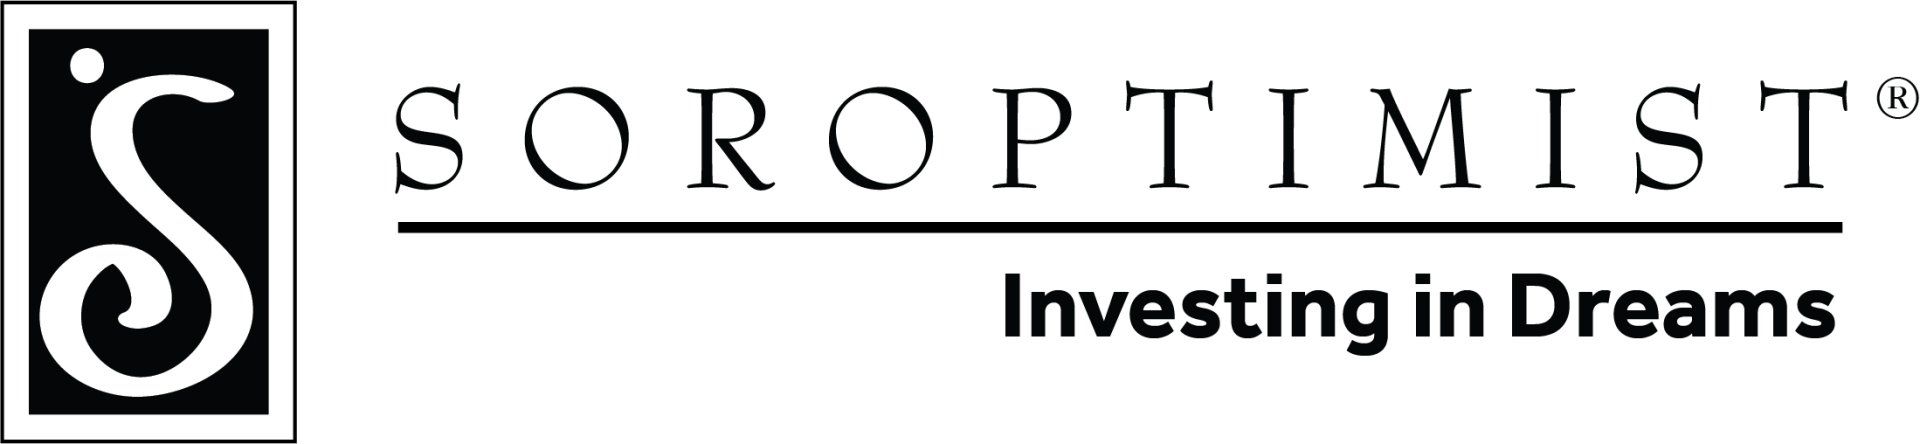 A black and white logo for soroptimist investing in dreams